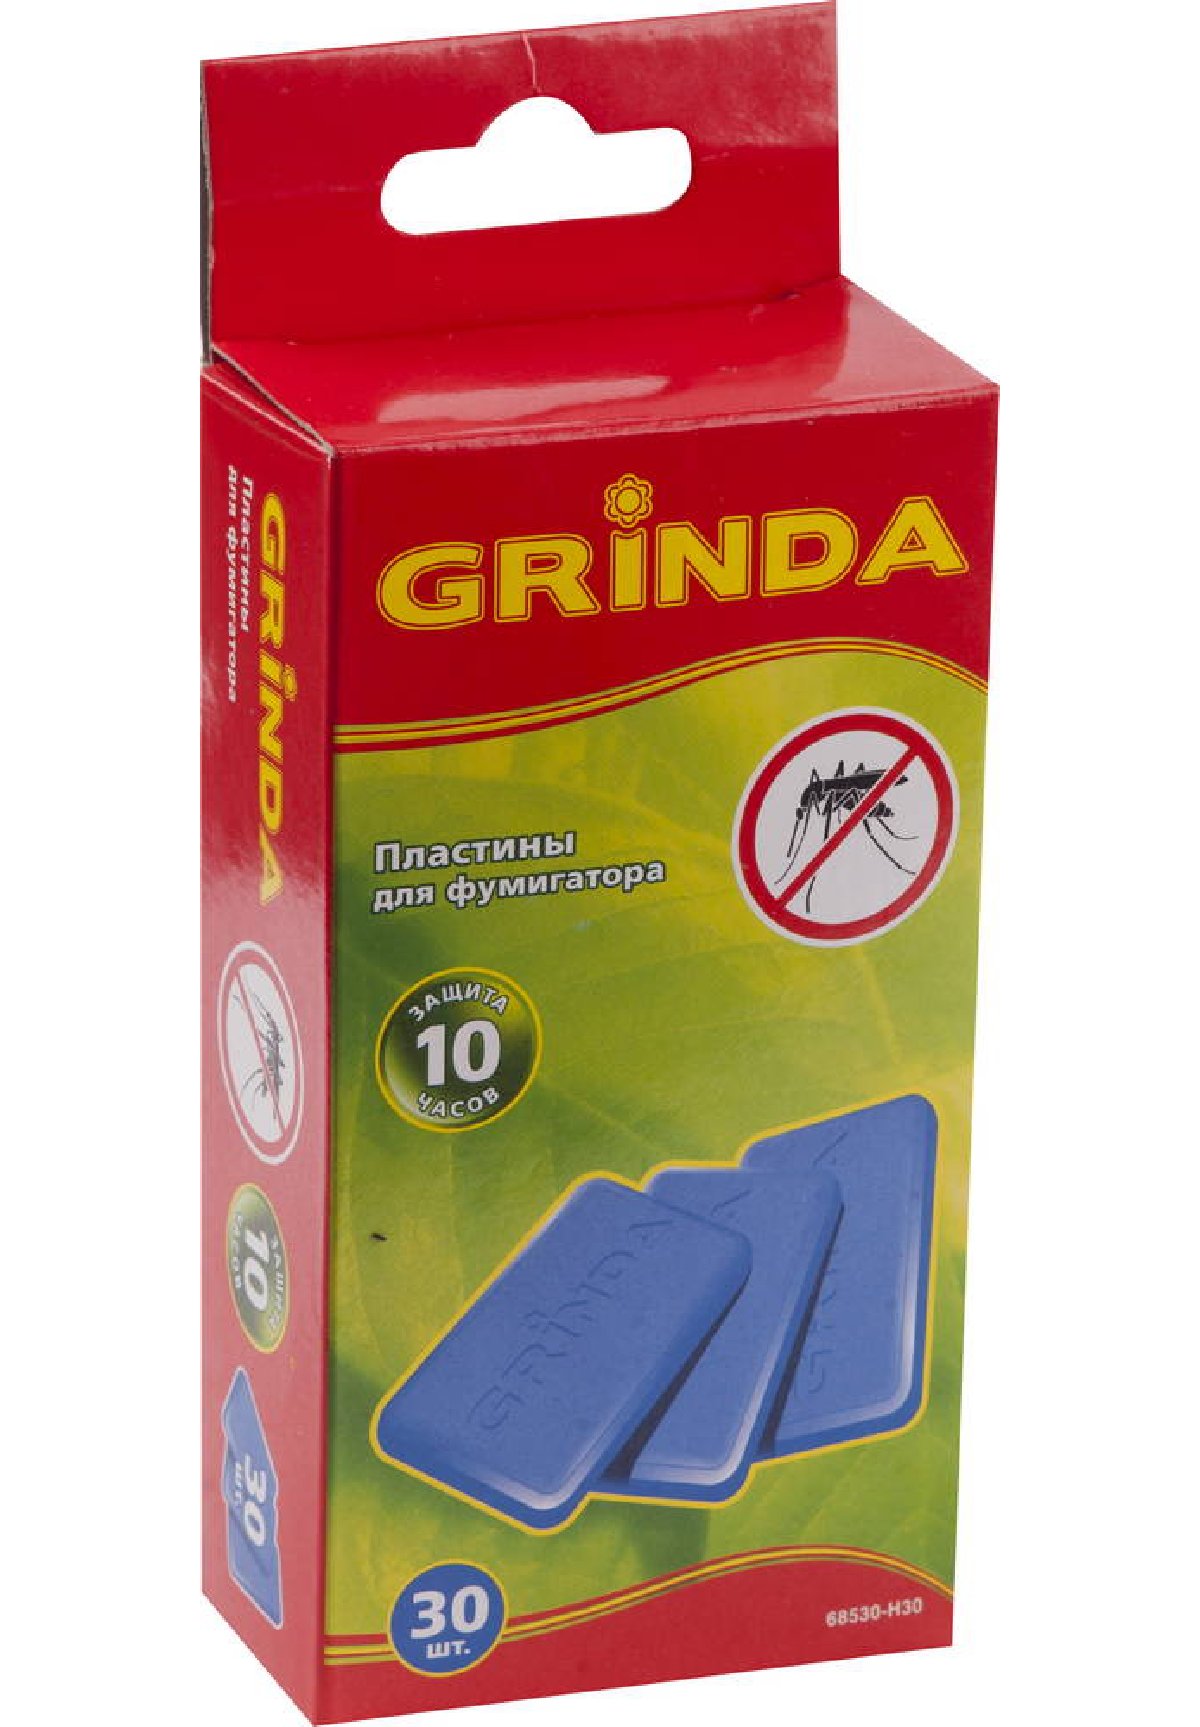 Пластины для фумигатора GRINDA 30 шт. (68530-H30)